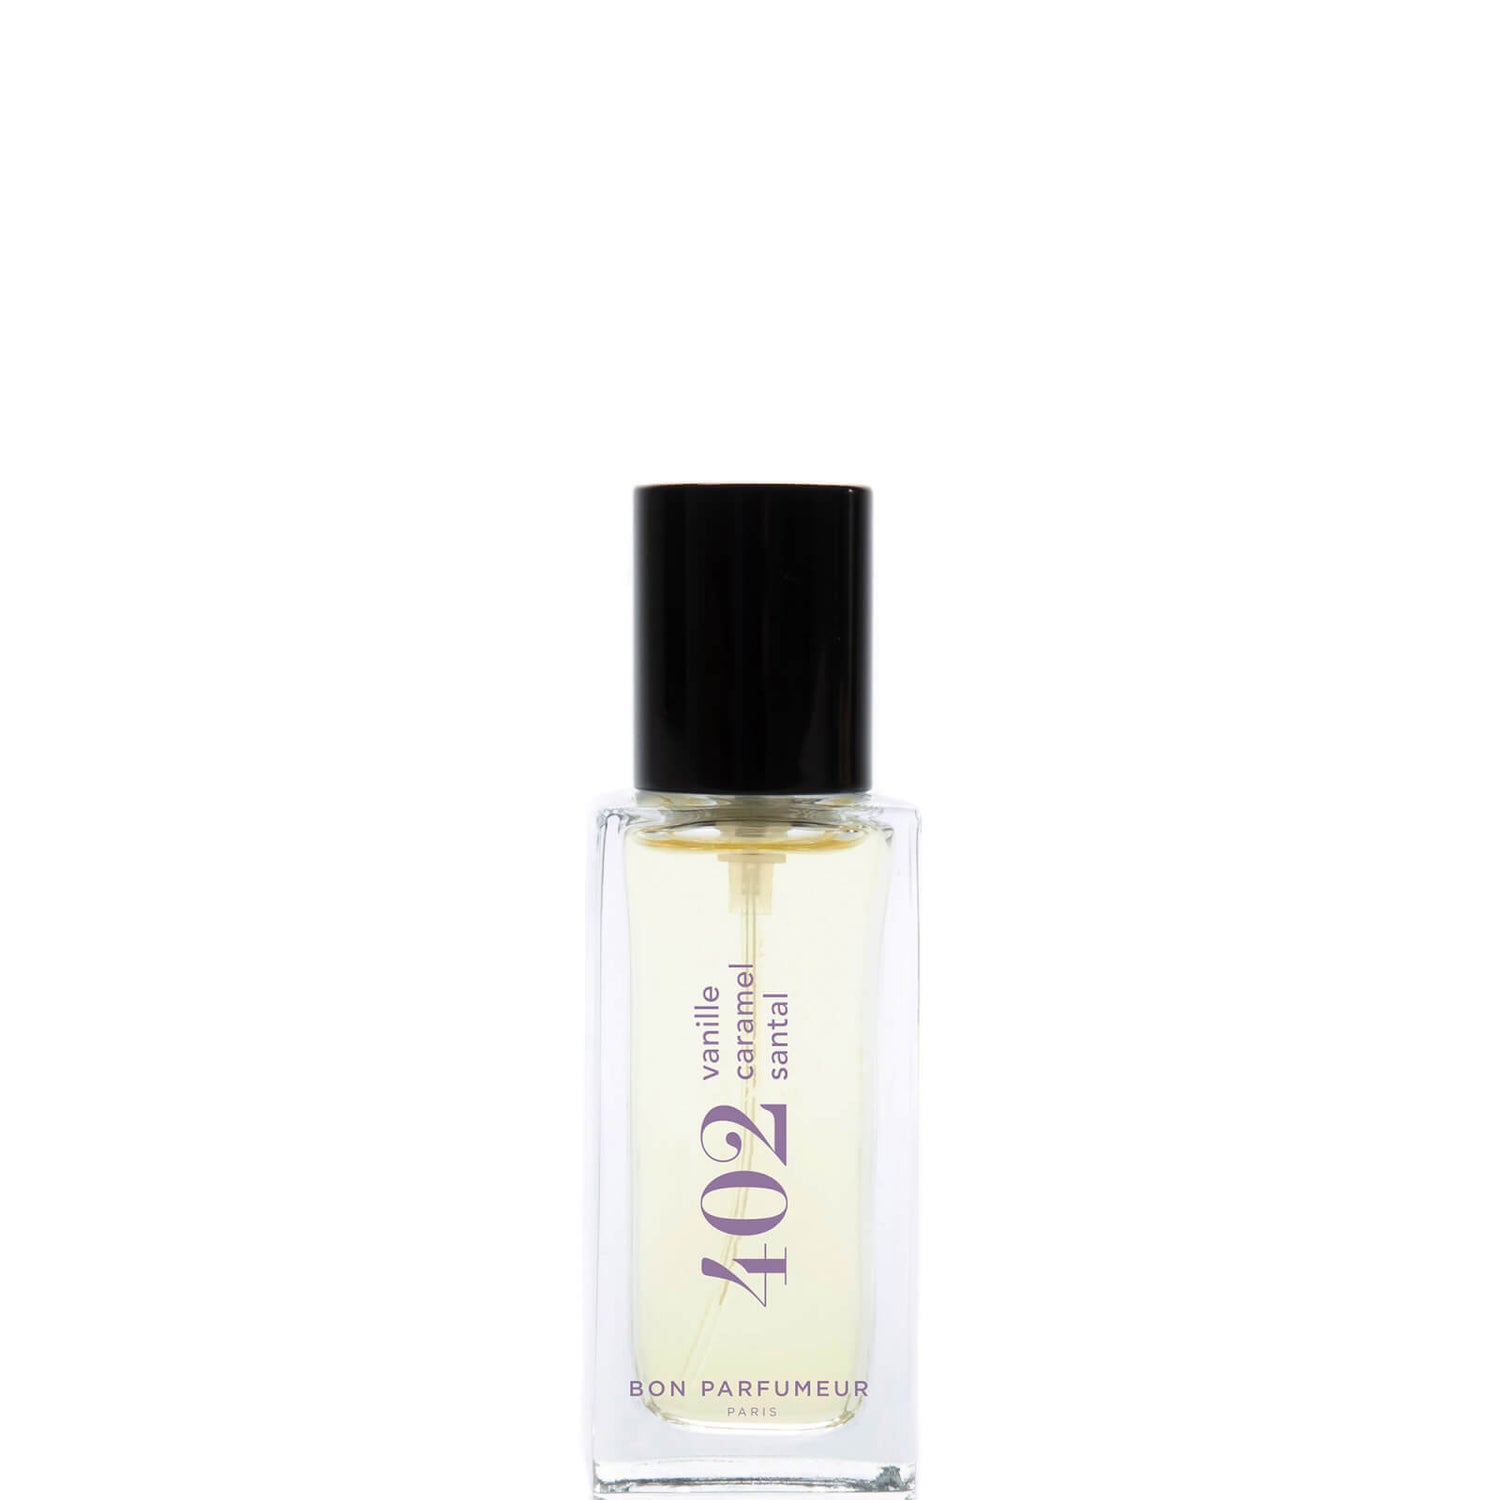 Bon Parfumeur 402 Vanilla Toffee Sandalwood Eau de Parfum - 15 ml